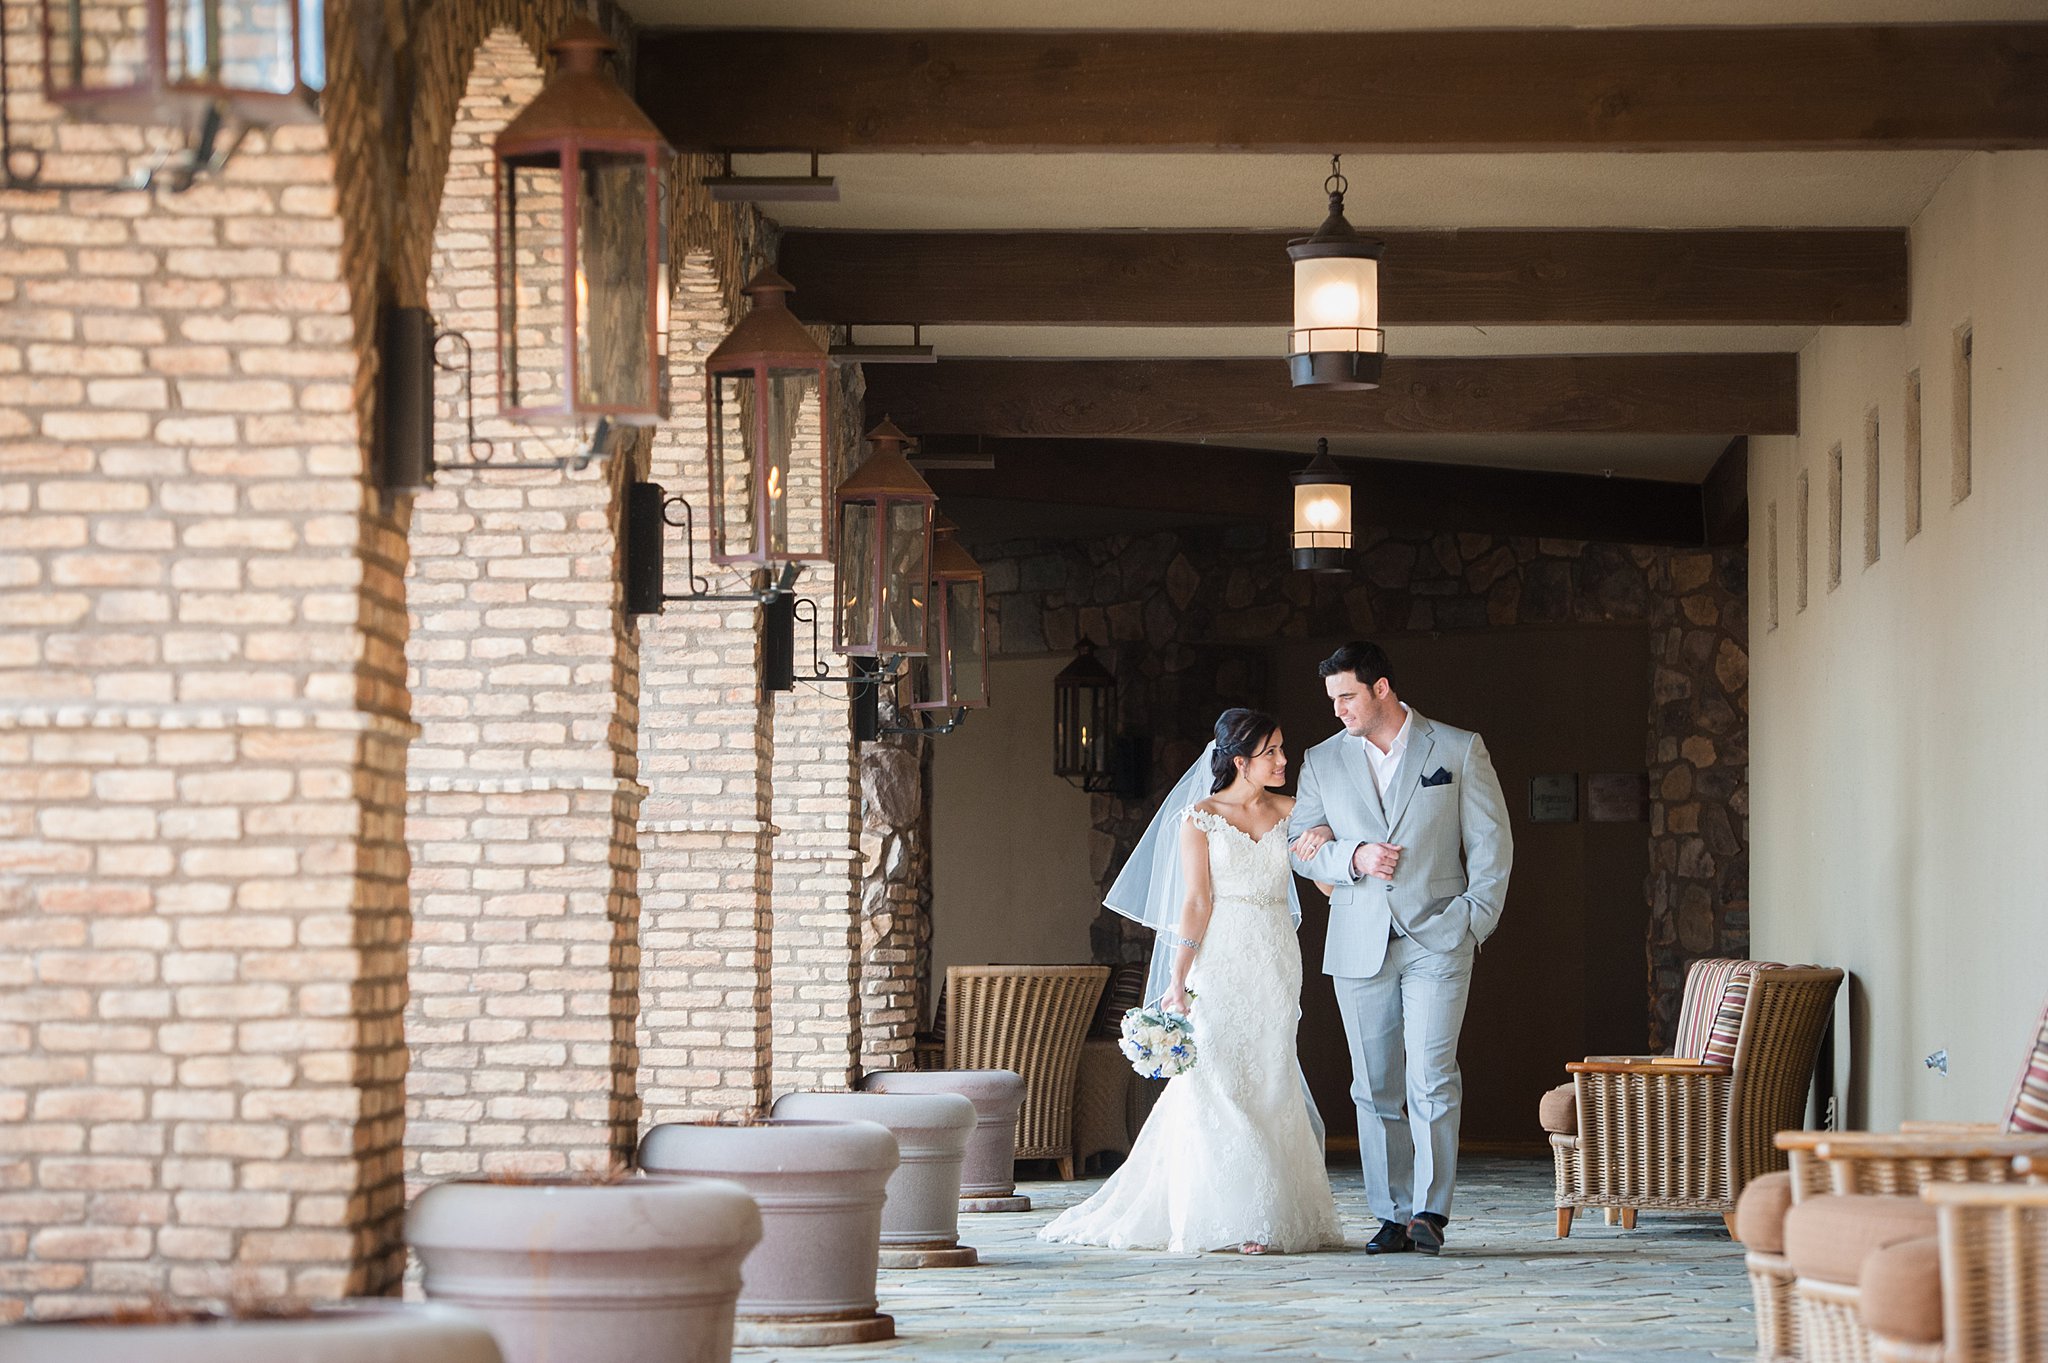 Newlyweds walk down an outdoor hallway on a stone floor arm in arm colorado springs wedding planners